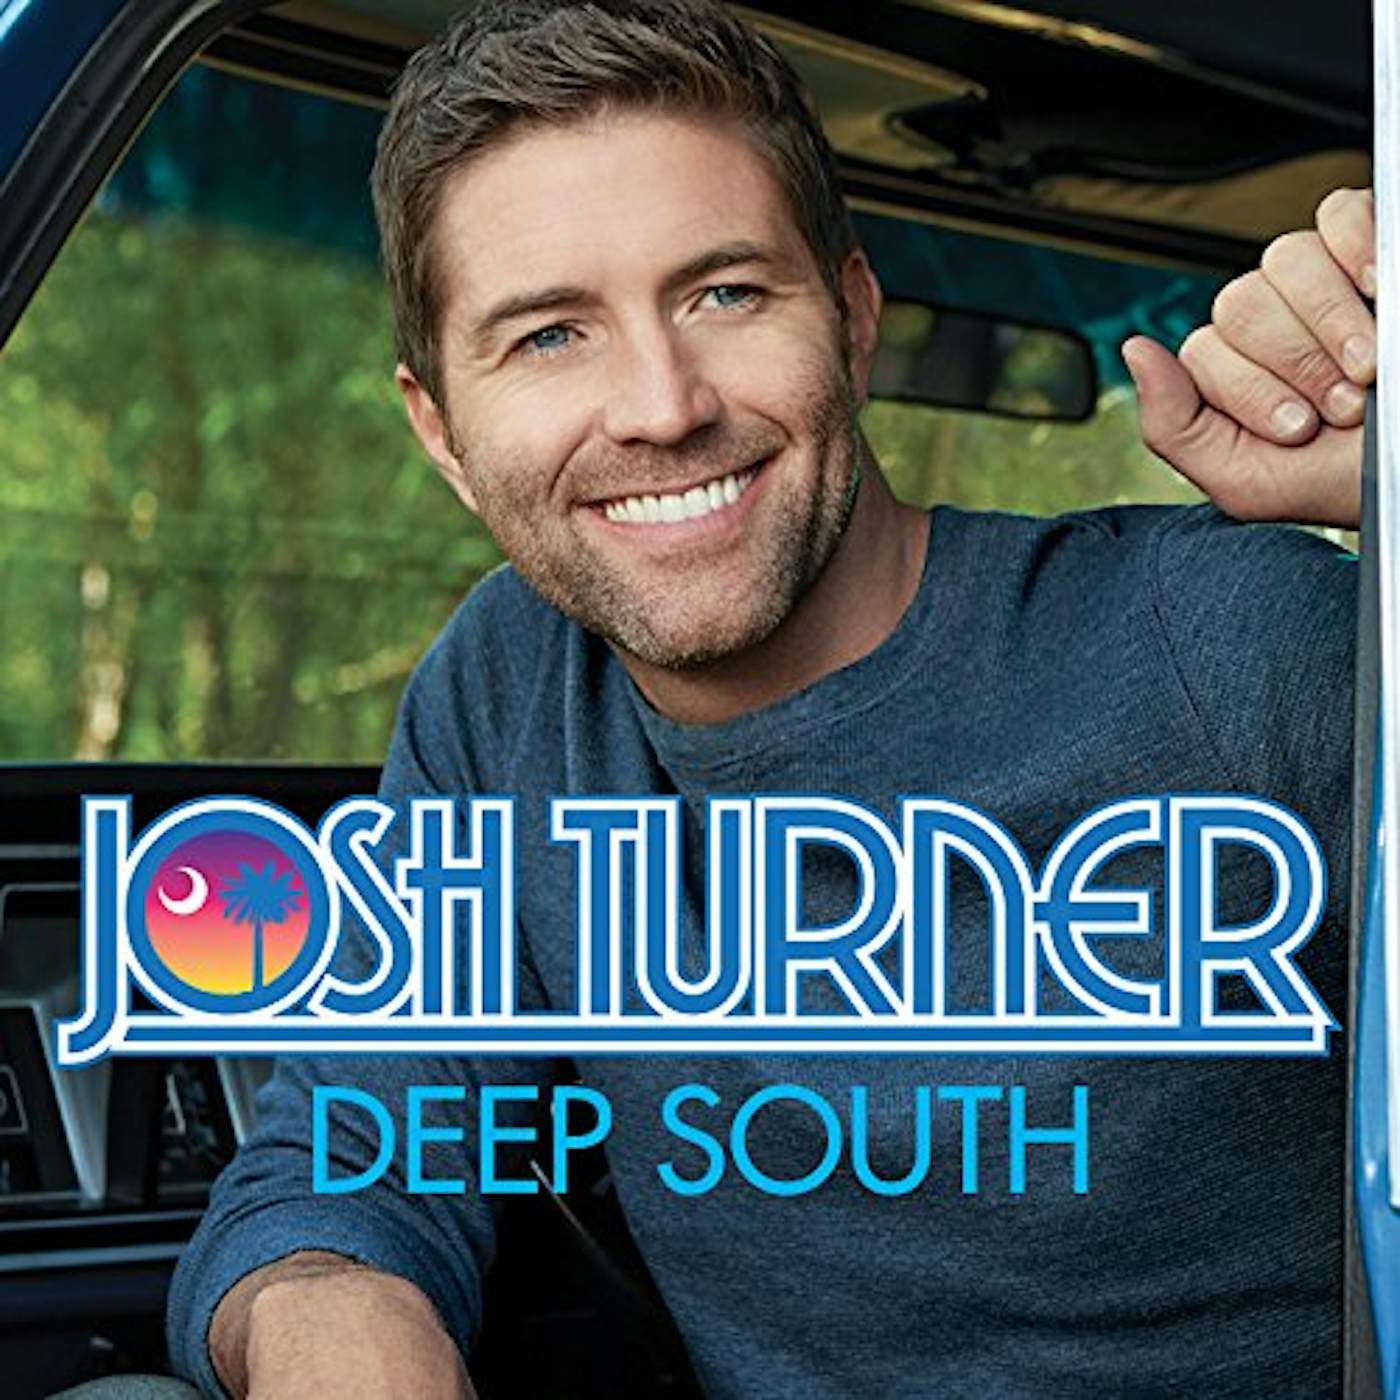 Josh Turner Deep South Vinyl Record